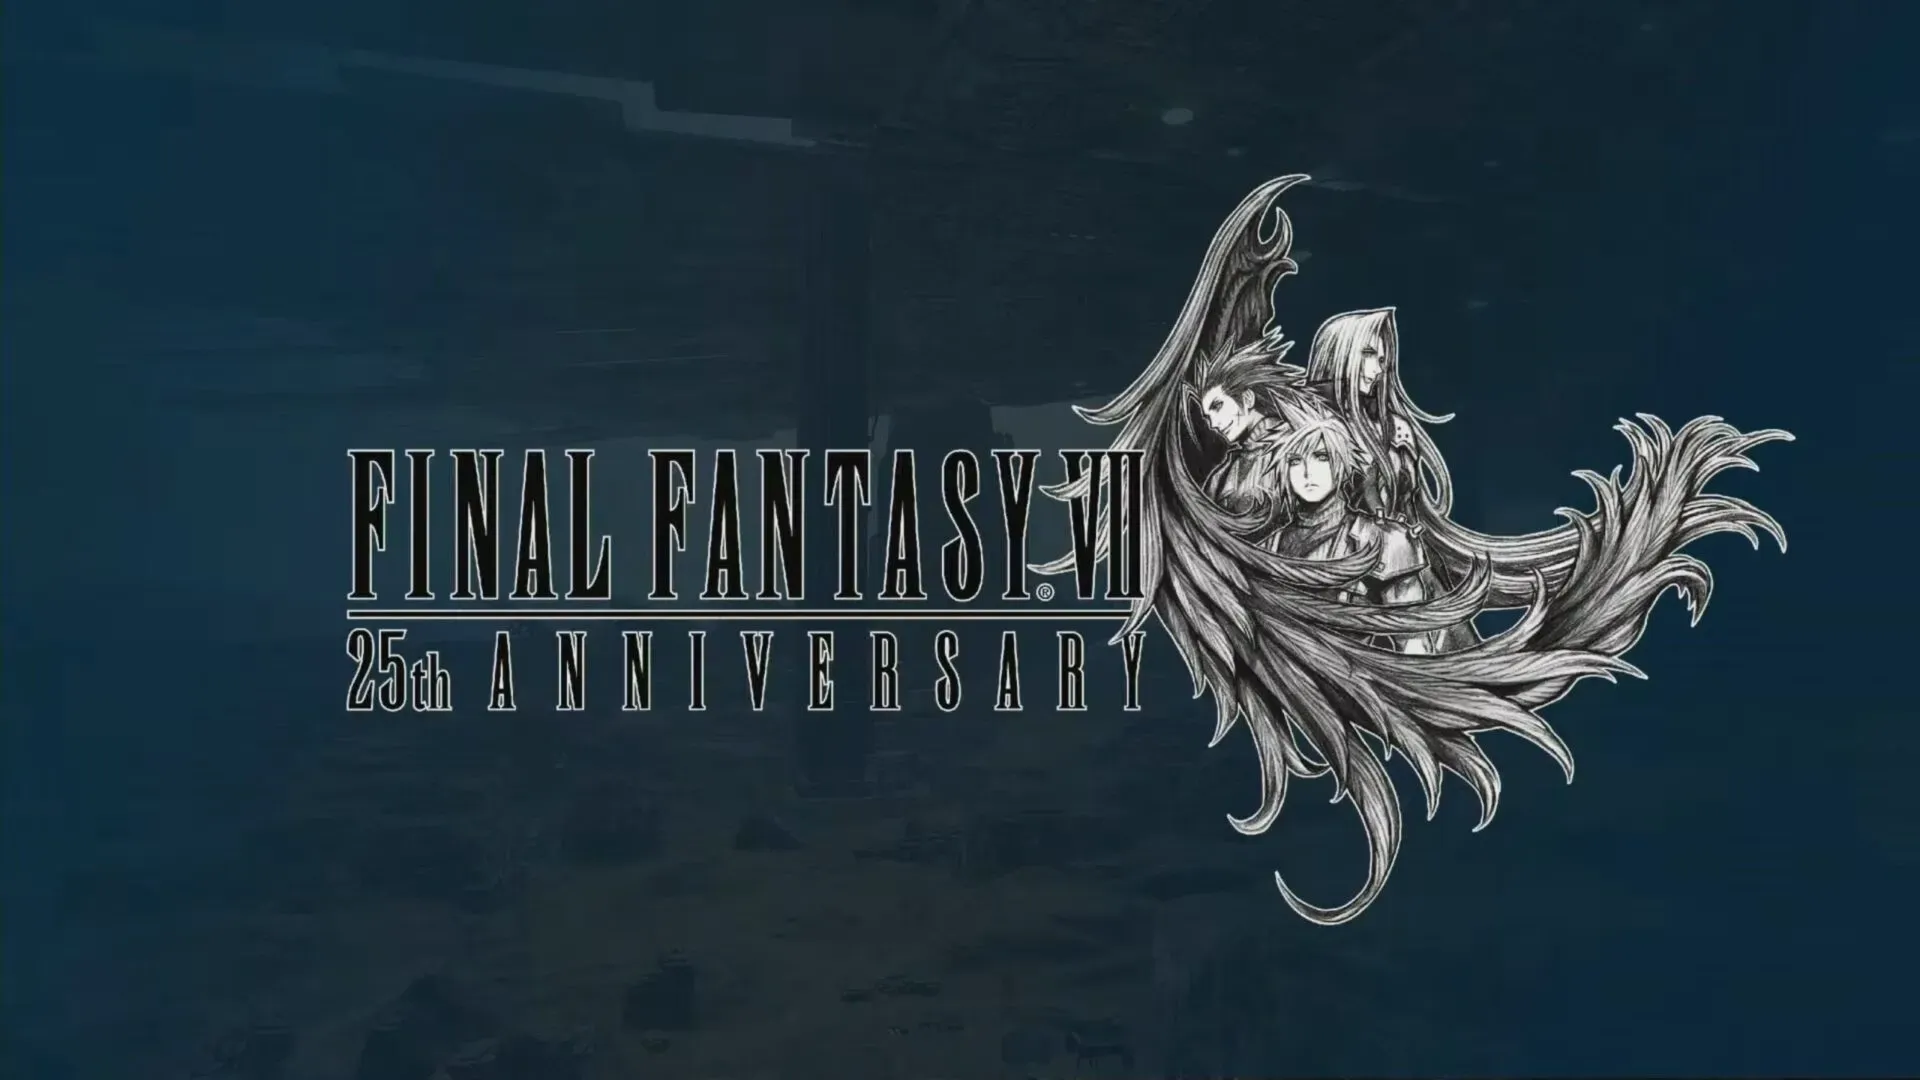 Final Fantasy 7 Ever Crisis might deviate from the original storyline